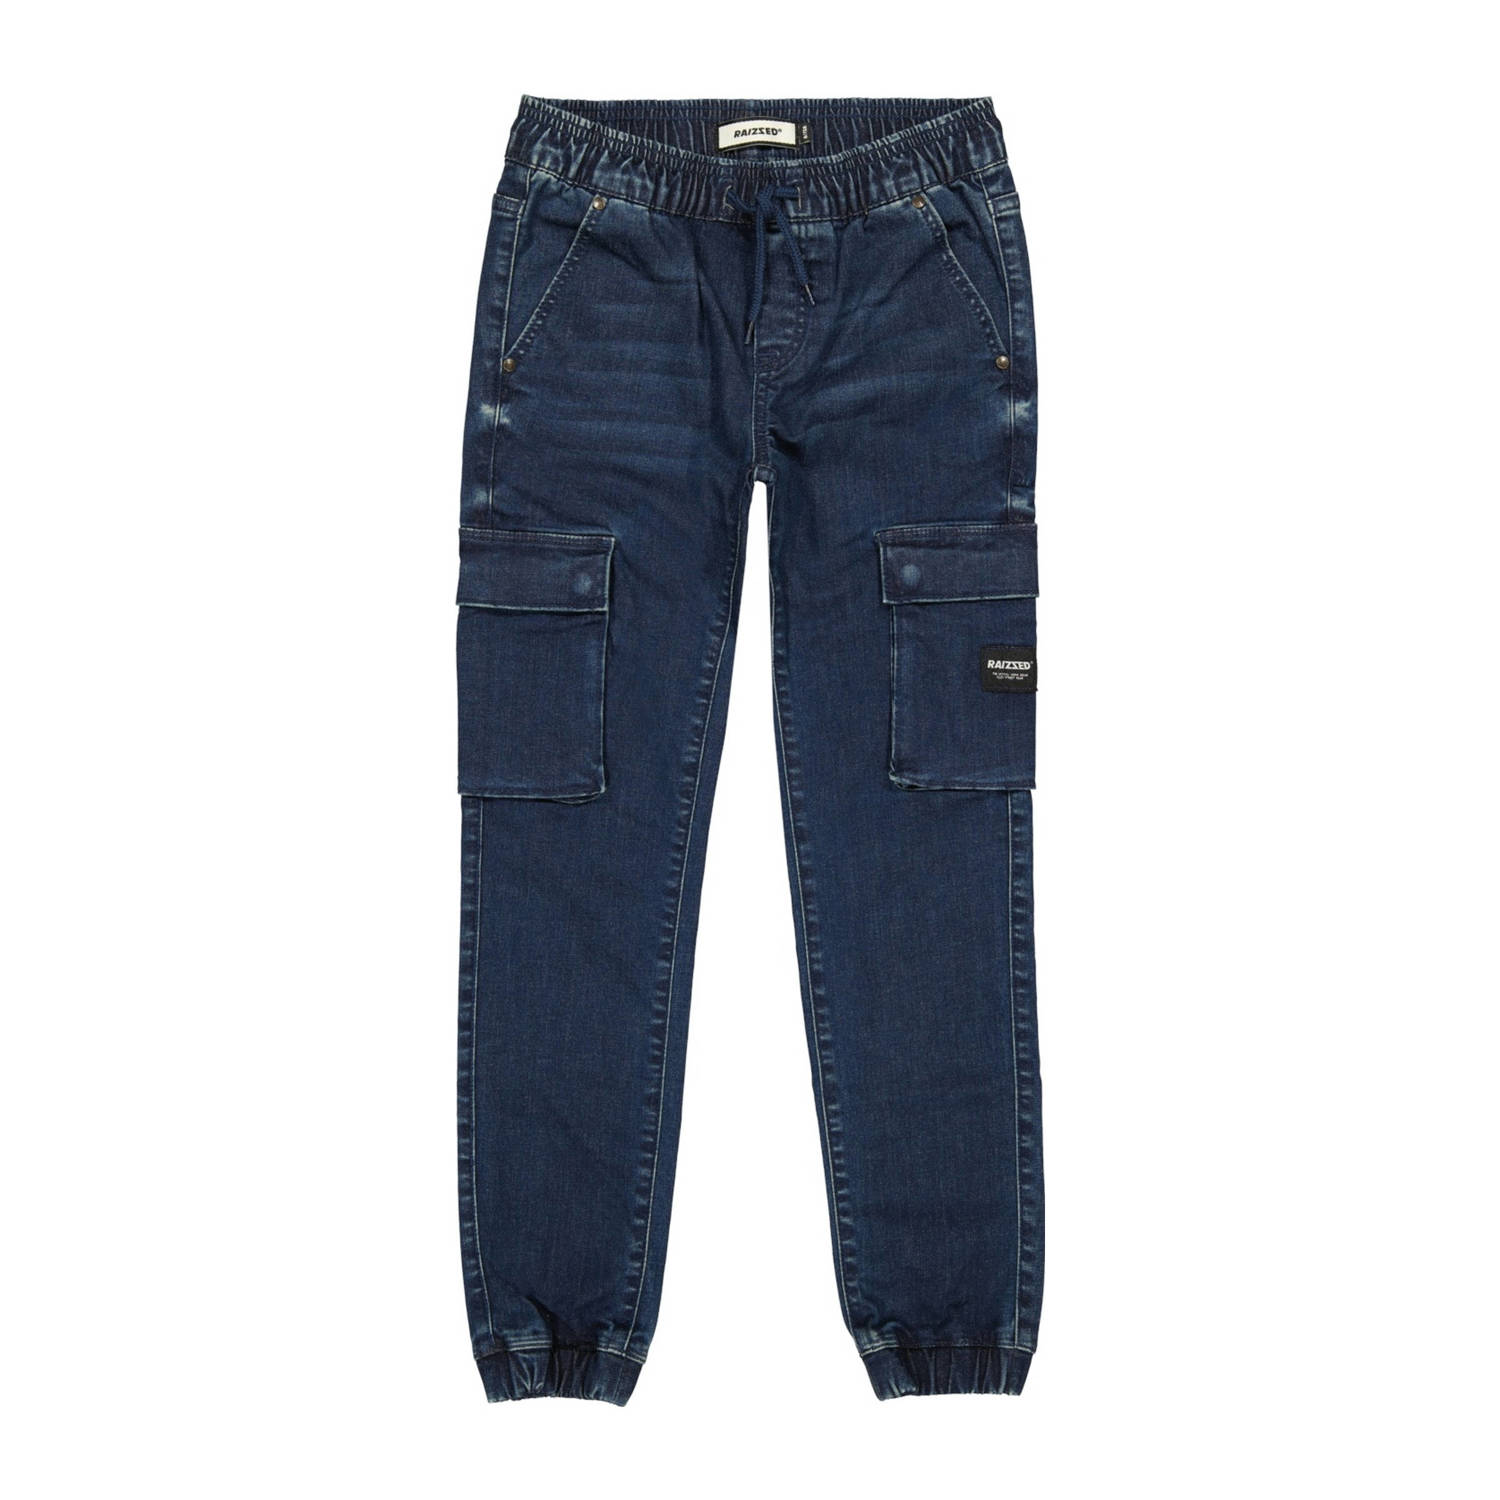 Raizzed slim fit jeans Shanghai dark blue stone Blauw Jongens Stretchdenim 116